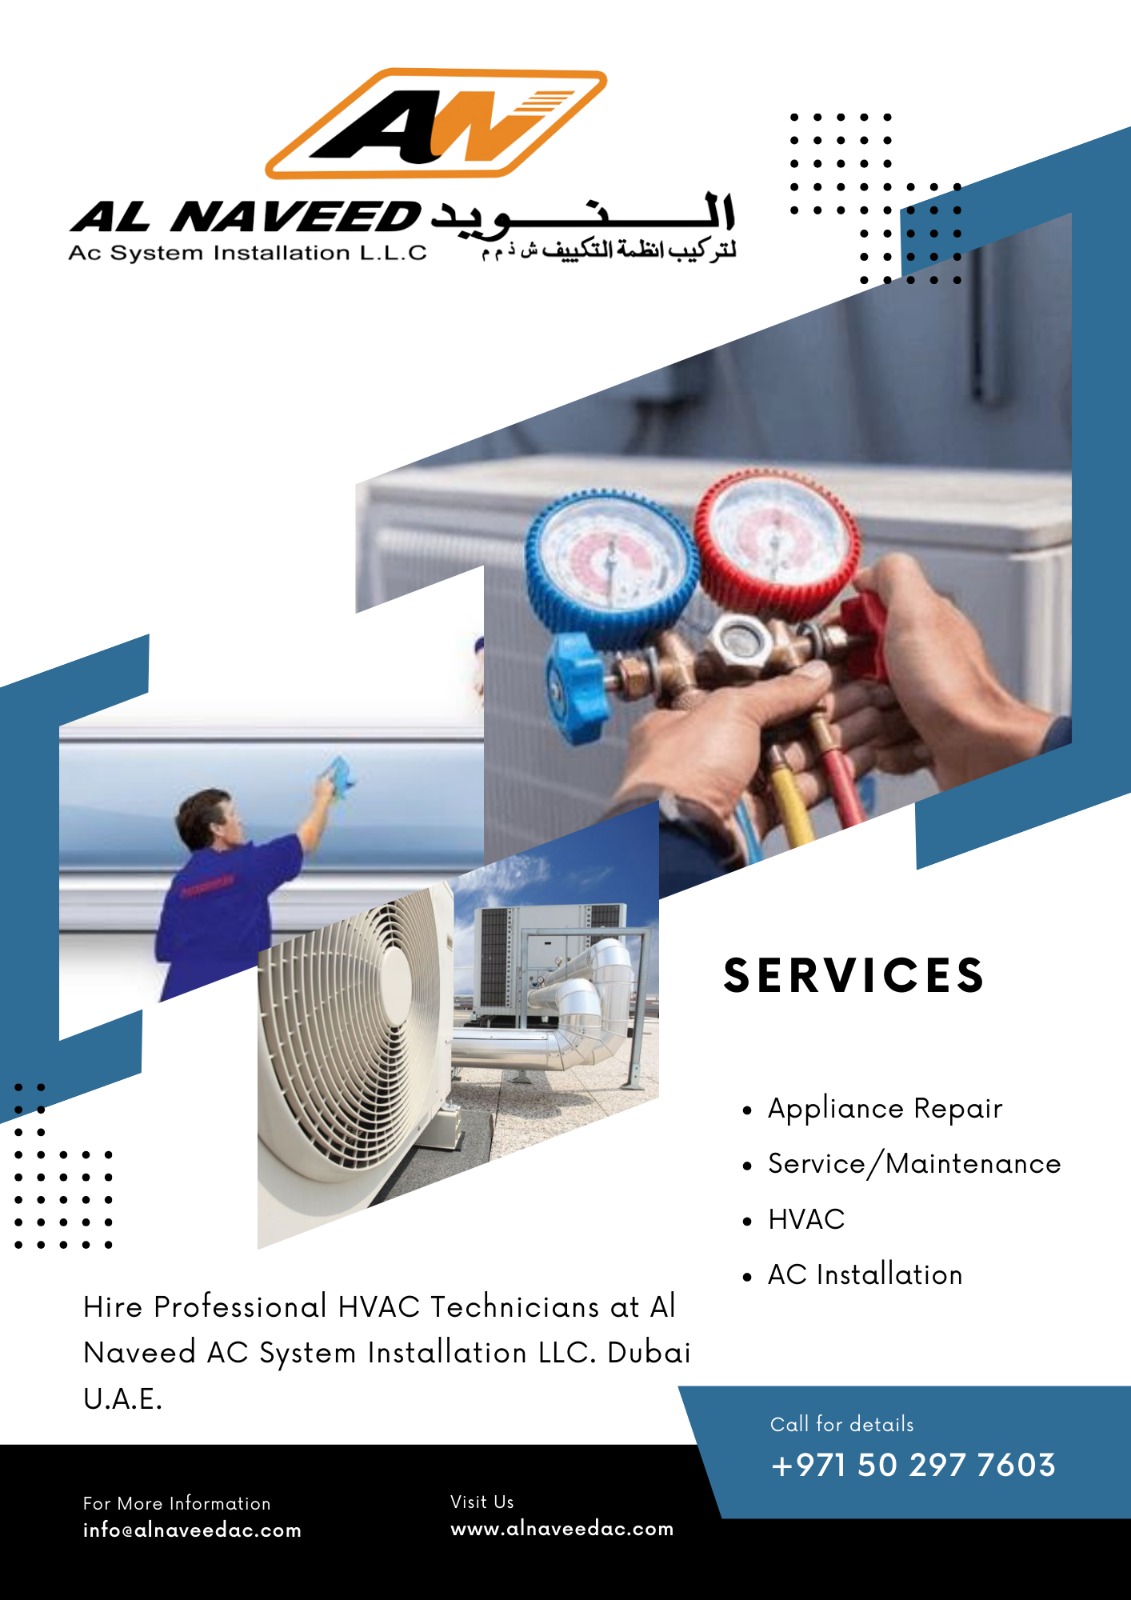 AL Naveed AC Maintenance Dubai offers